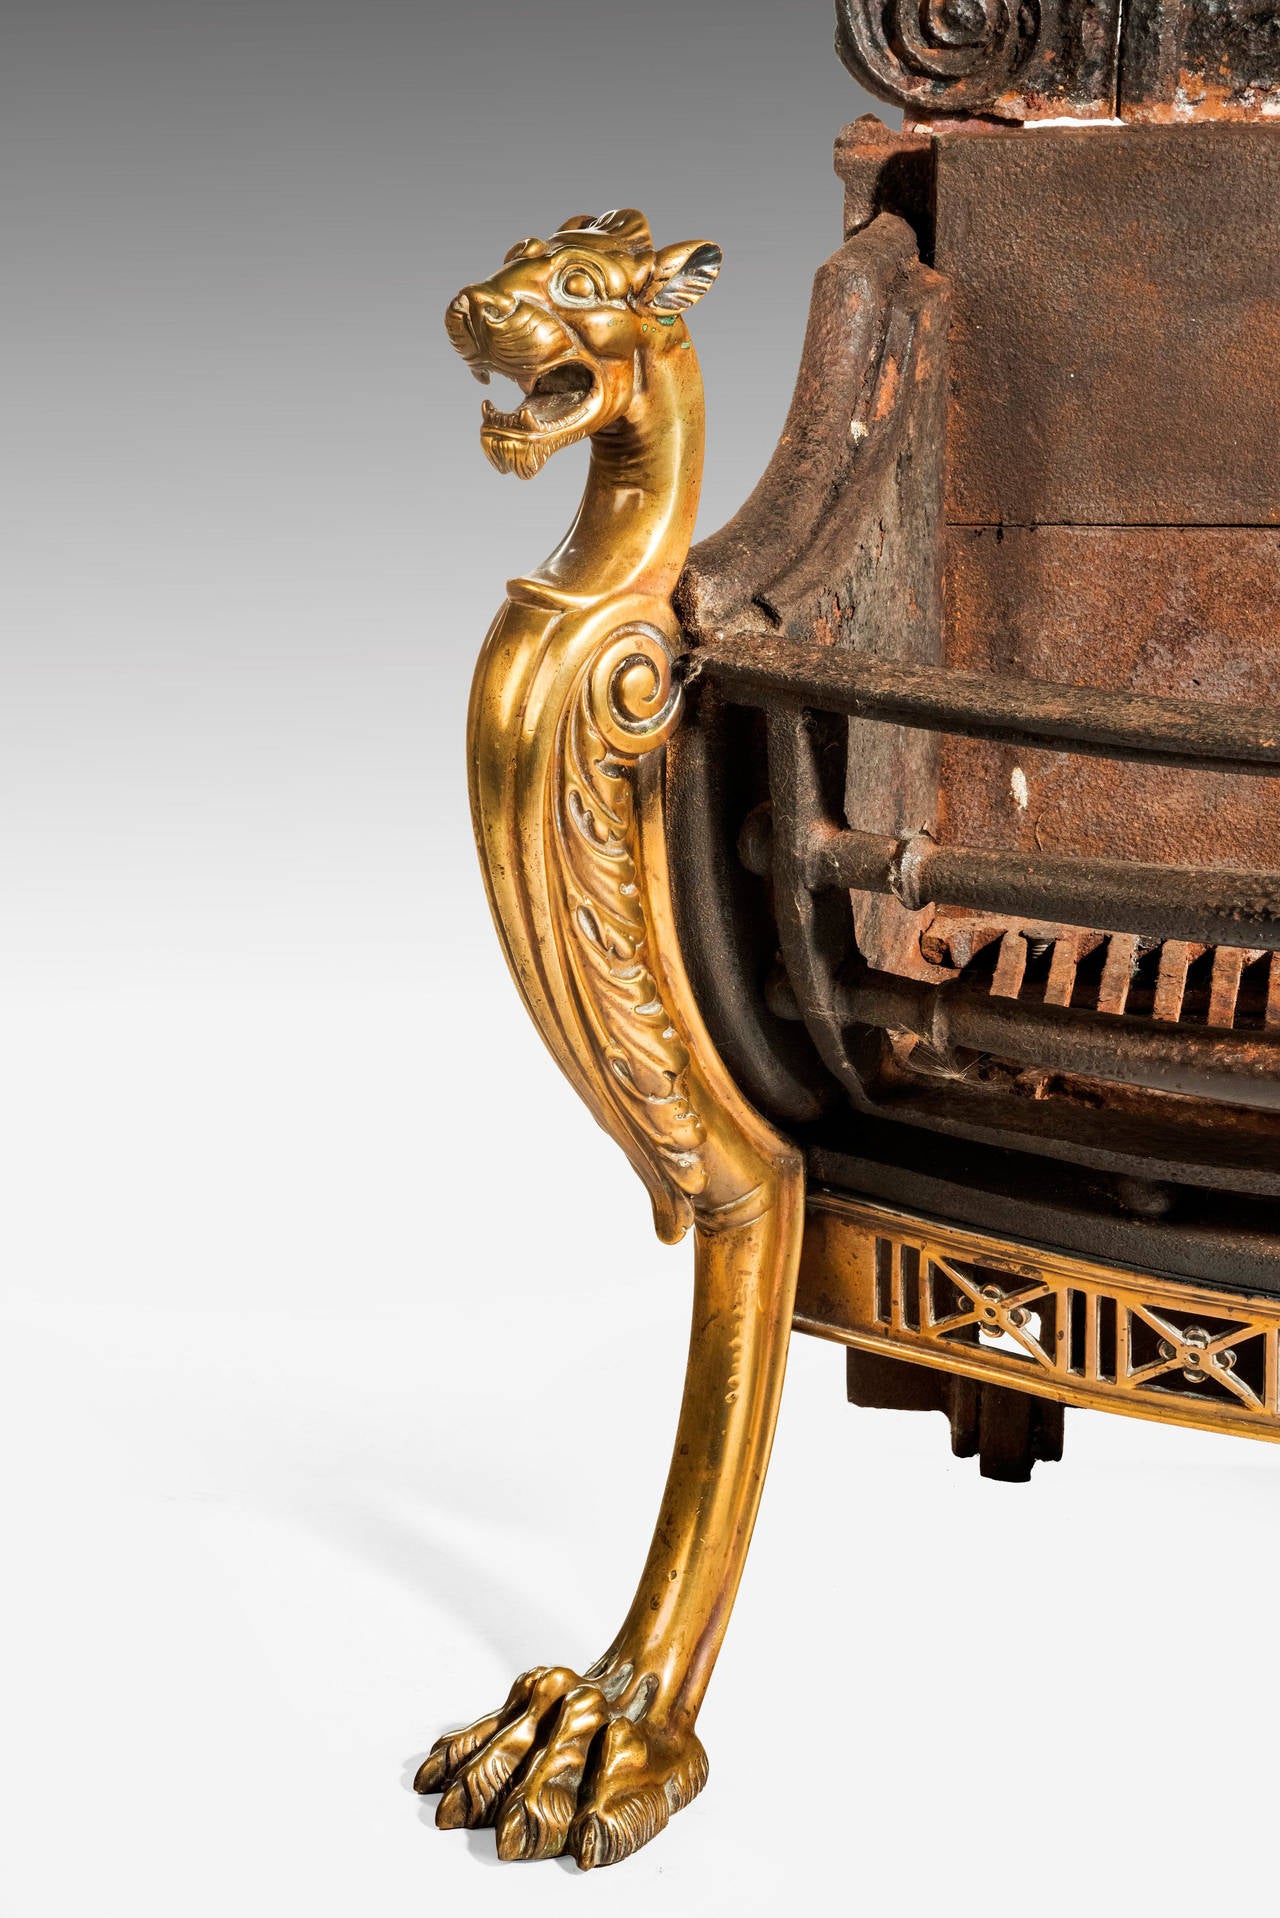 Great Britain (UK) Mid-19th Century Fire Basket